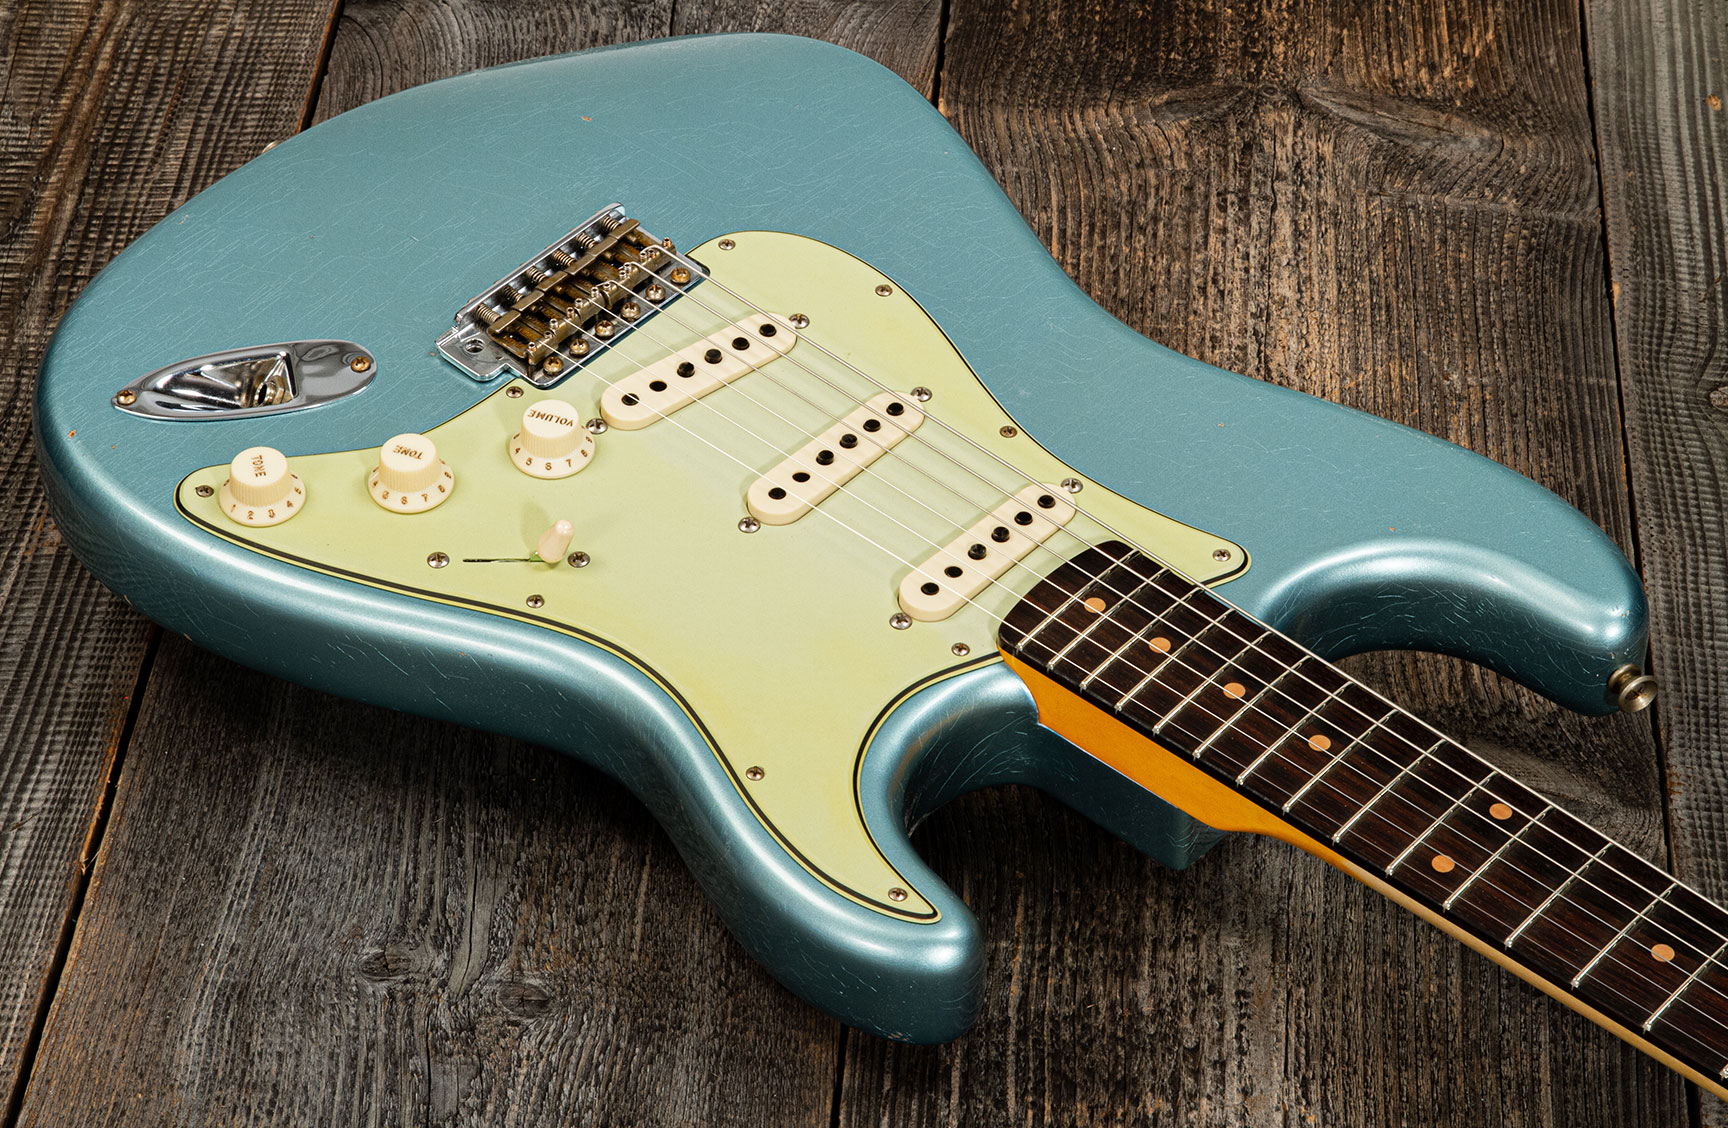 Fender Custom Shop Strat 1959 3s Trem Rw #cz566857 - Journeyman Relic Teal Green Metallic - E-Gitarre in Str-Form - Variation 2